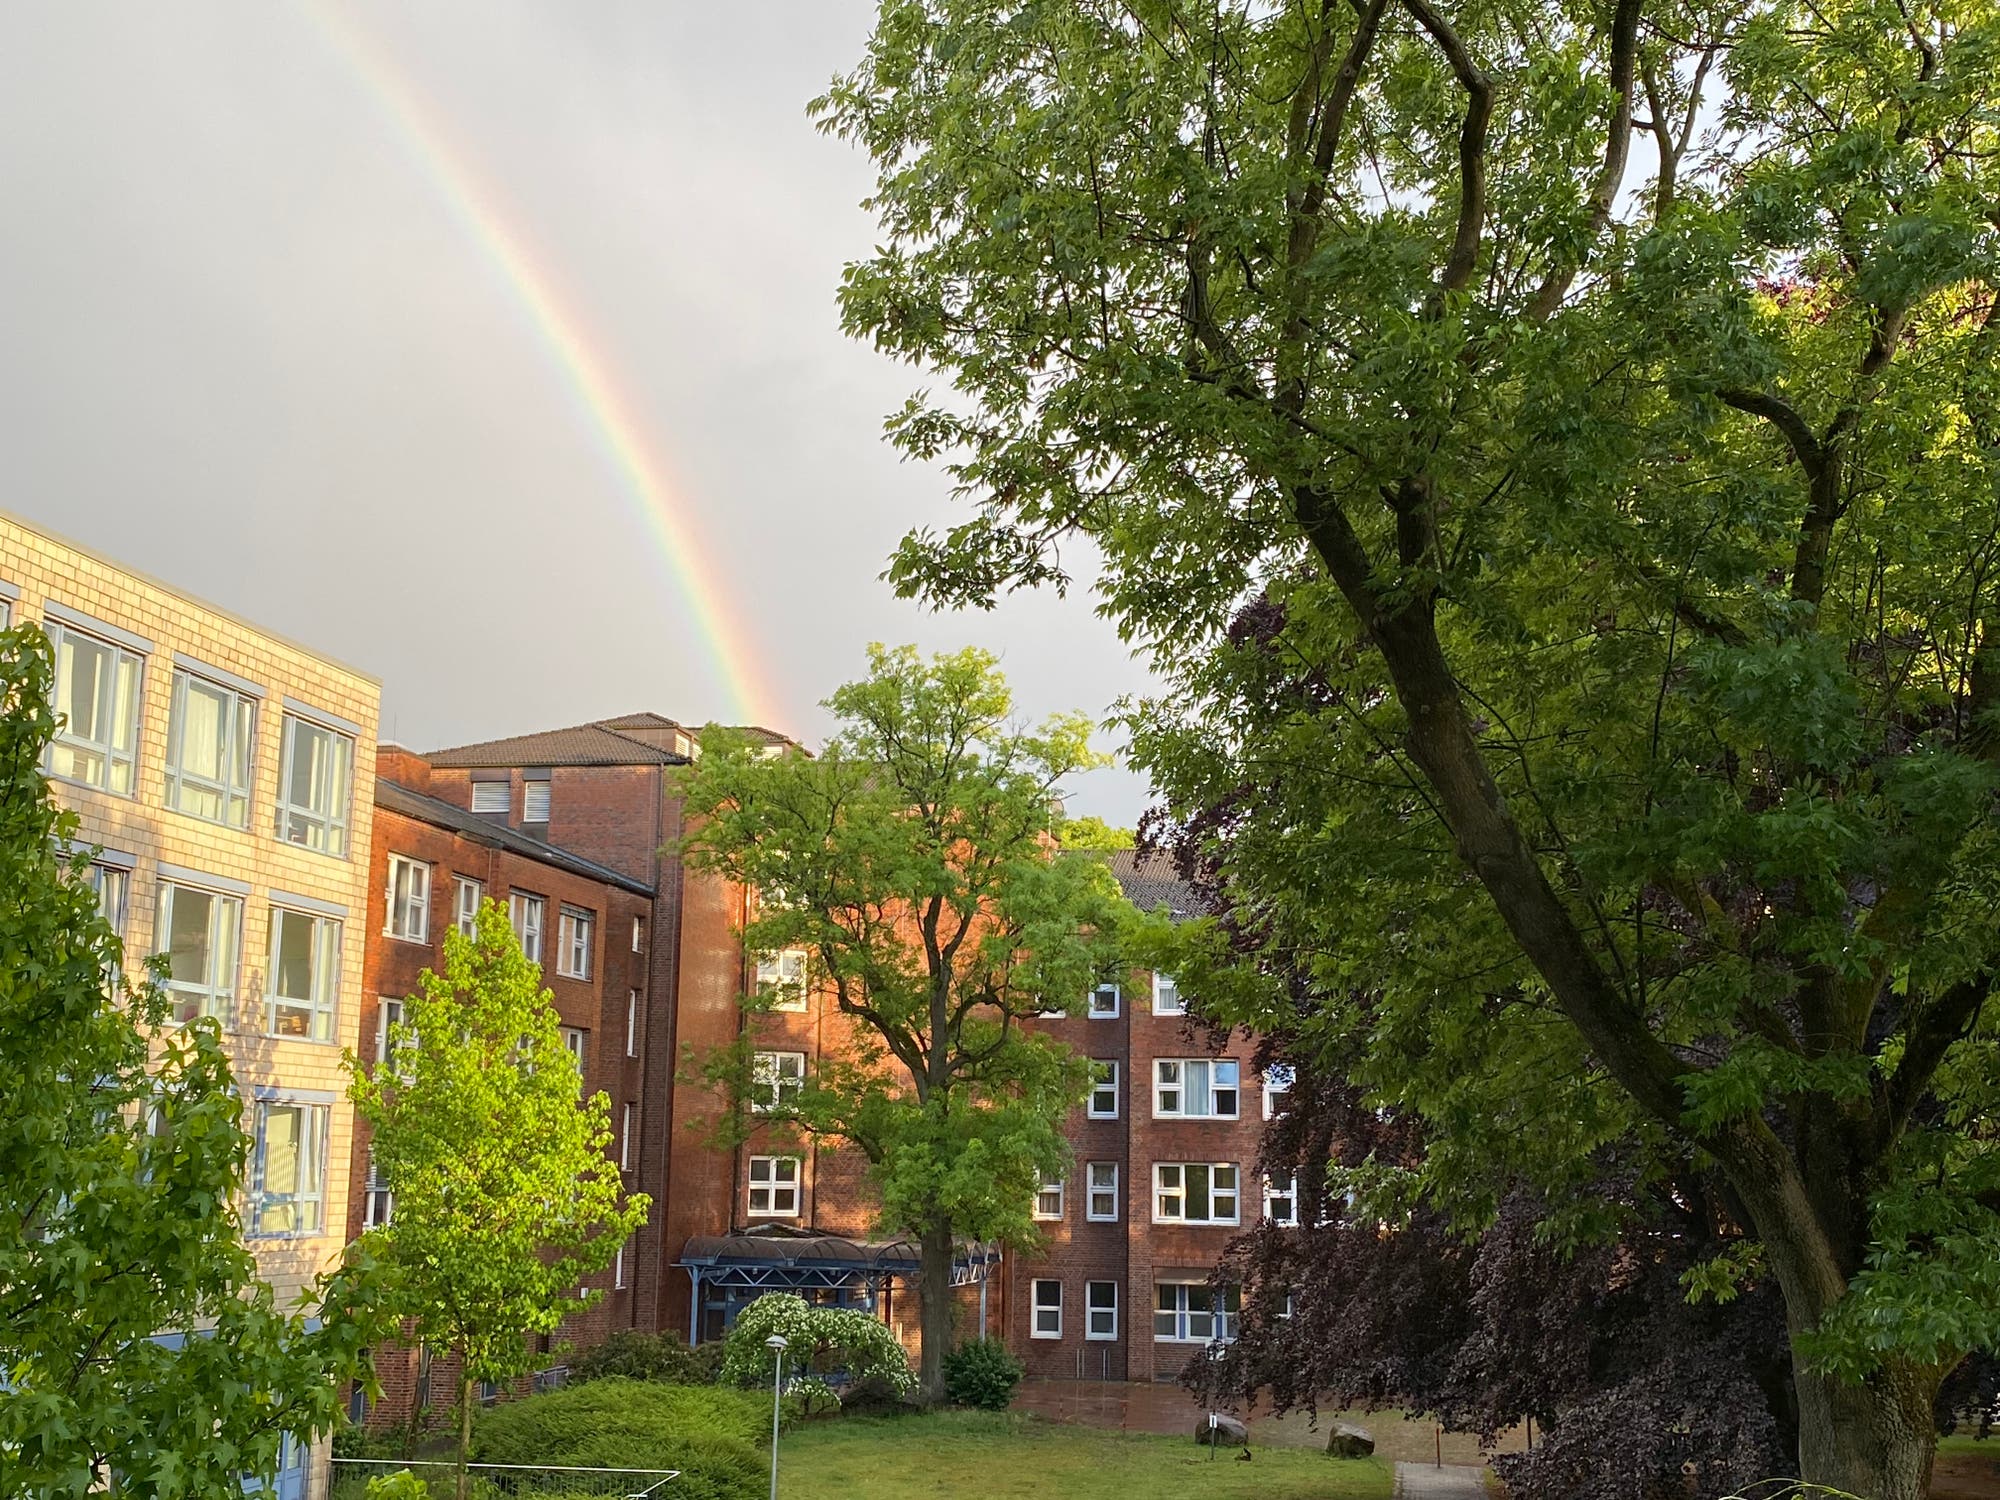 Regenbogen über dem Krankenhaus